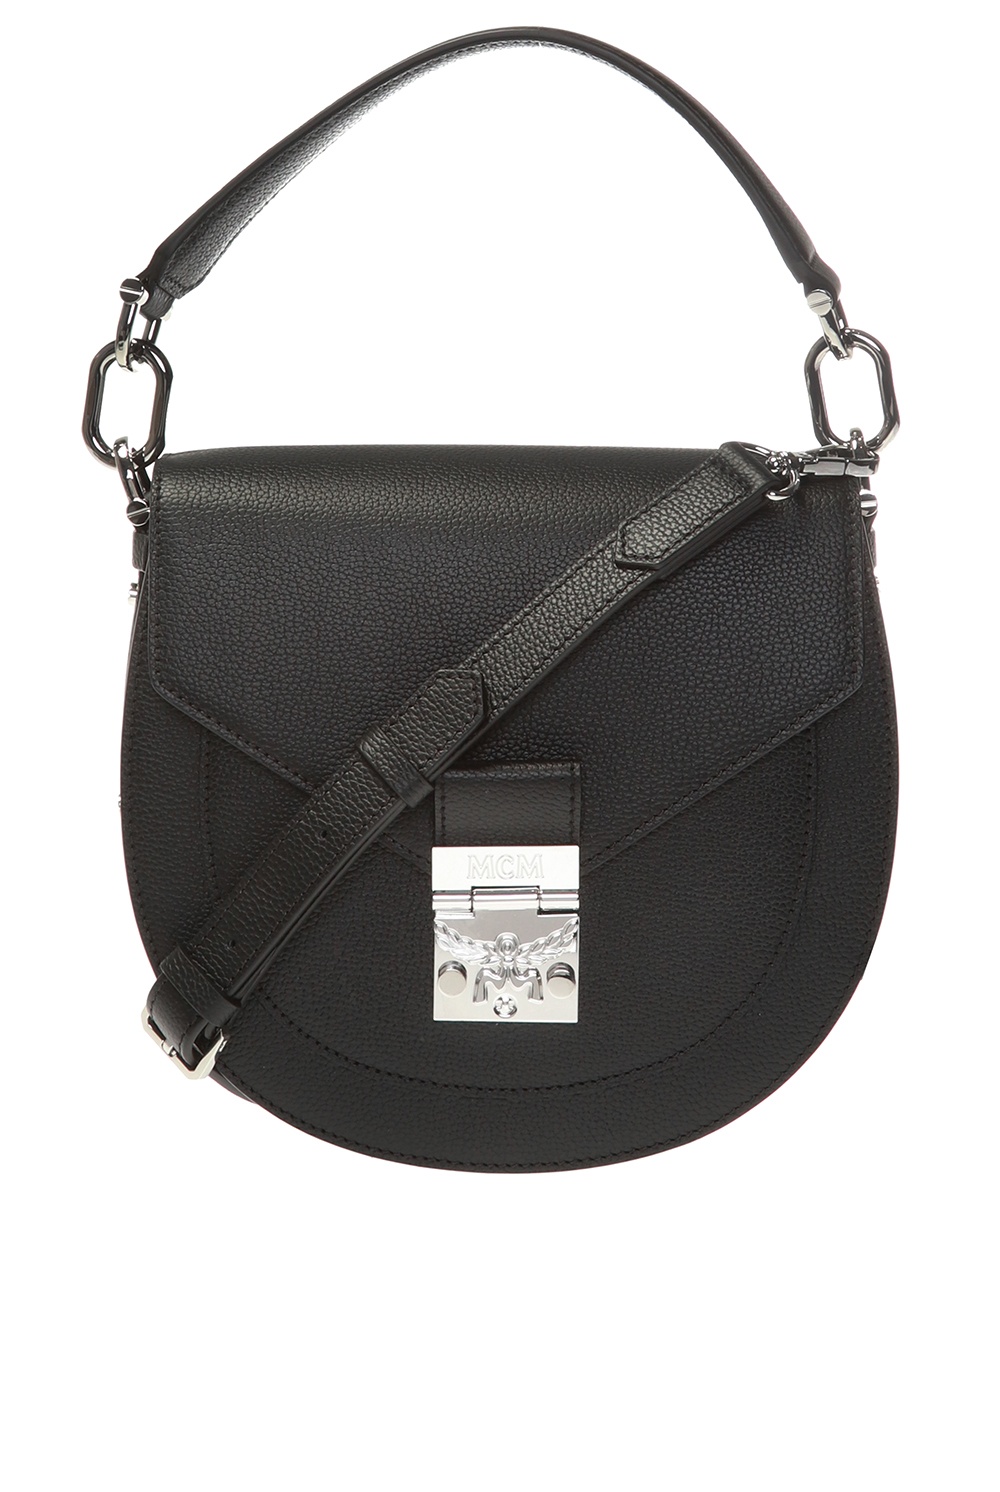 MCM 'Patricia Crossbody in Park Avenue Leather' Shoulder bag, Women's Bags